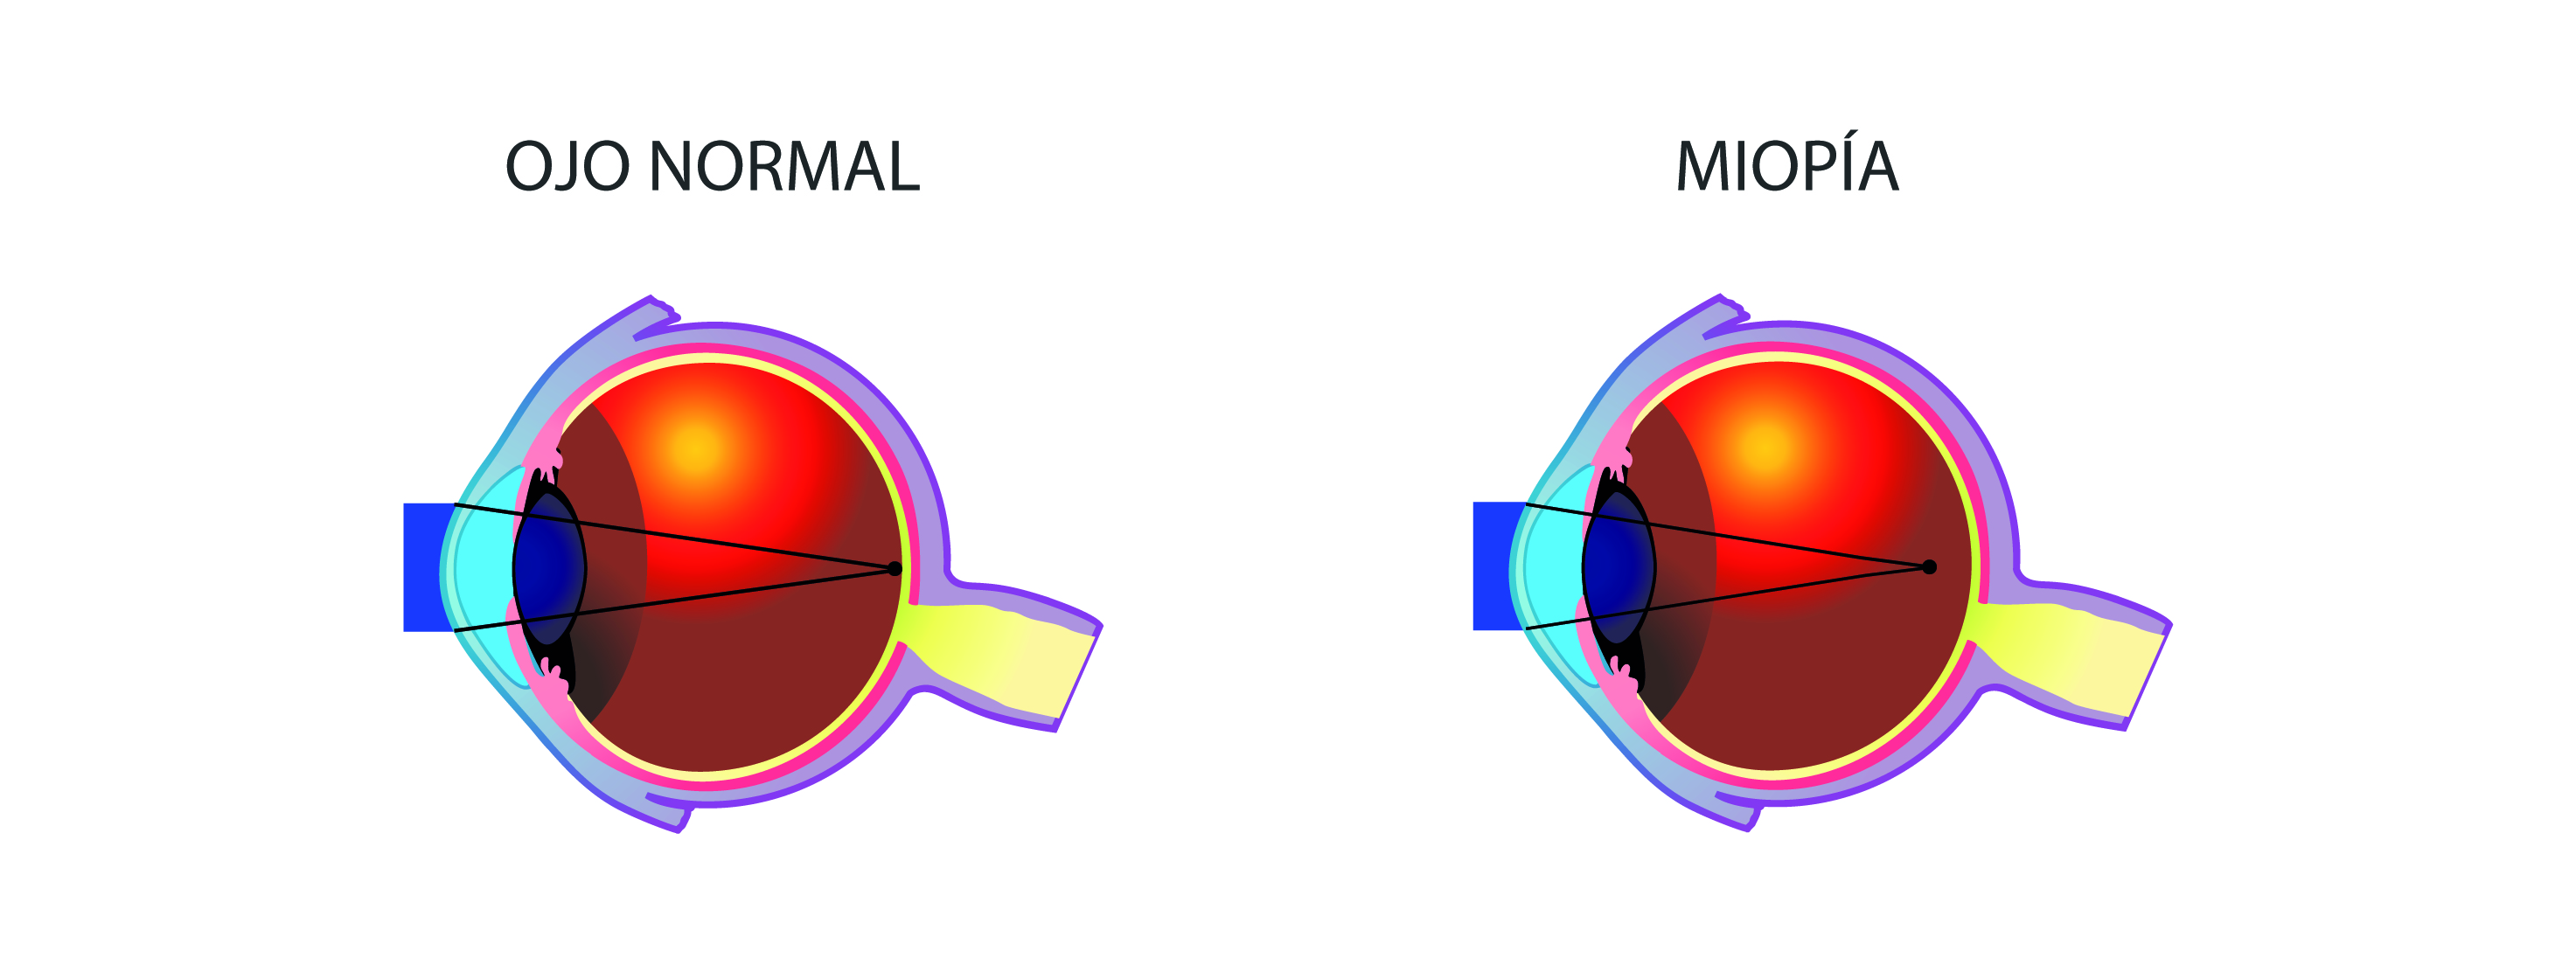 miopía defecto refractivo